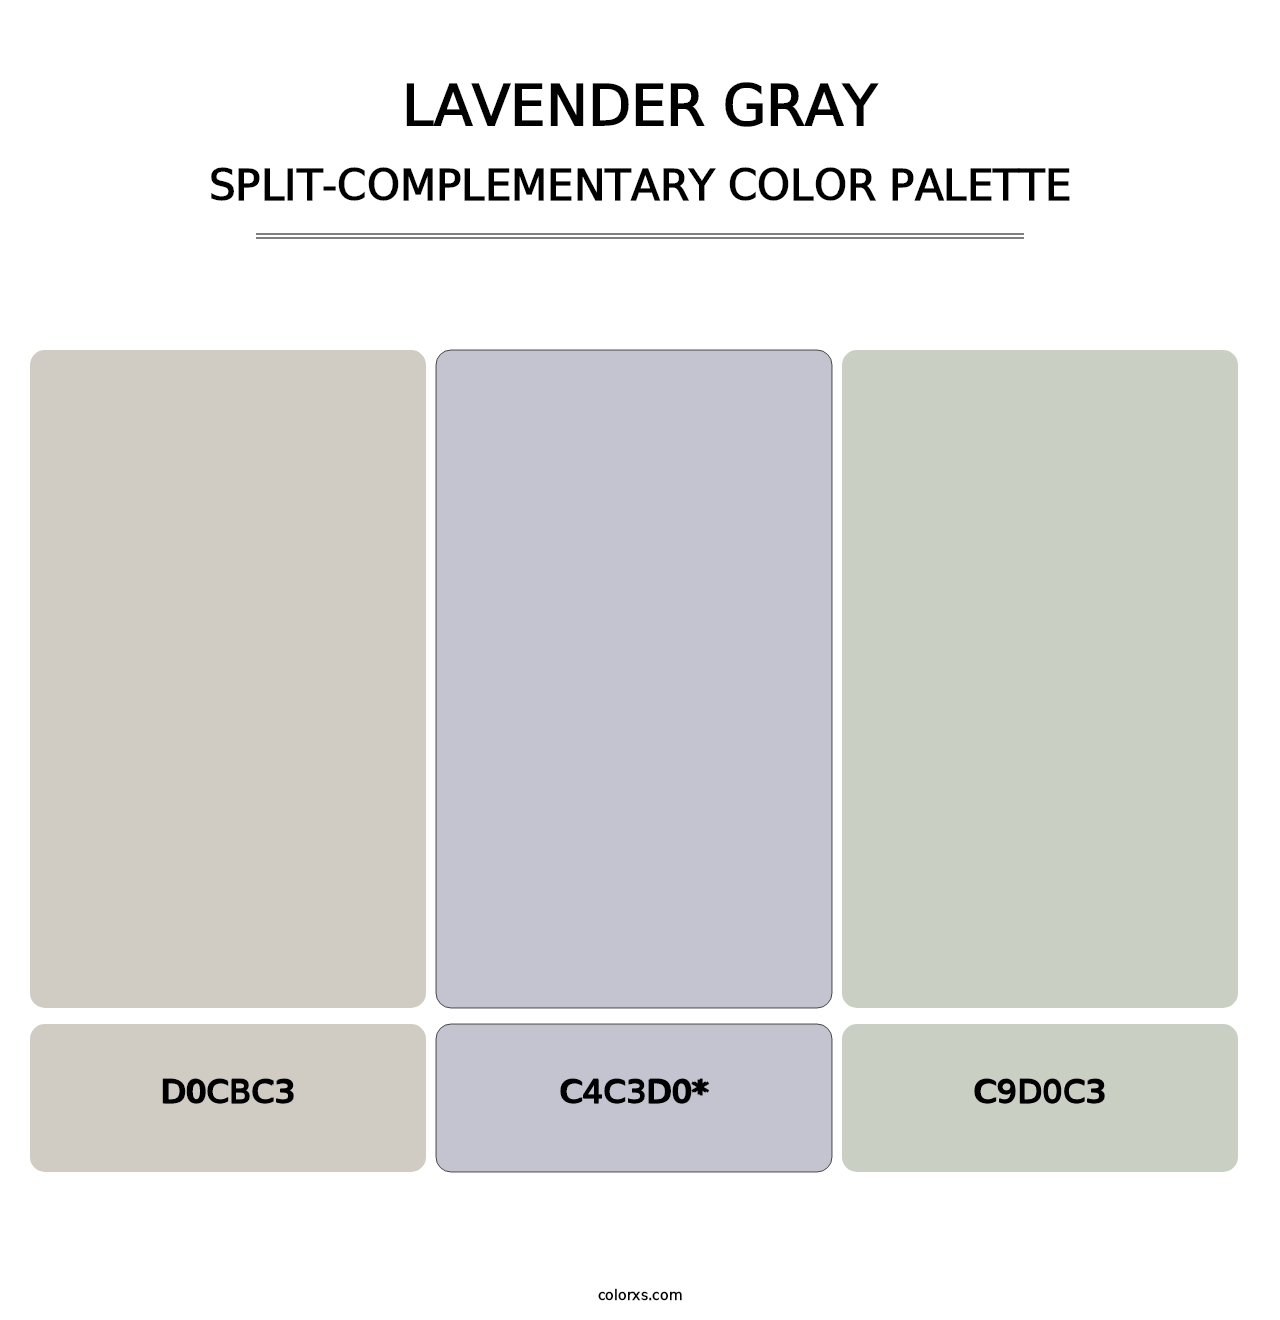 Lavender Gray - Split-Complementary Color Palette